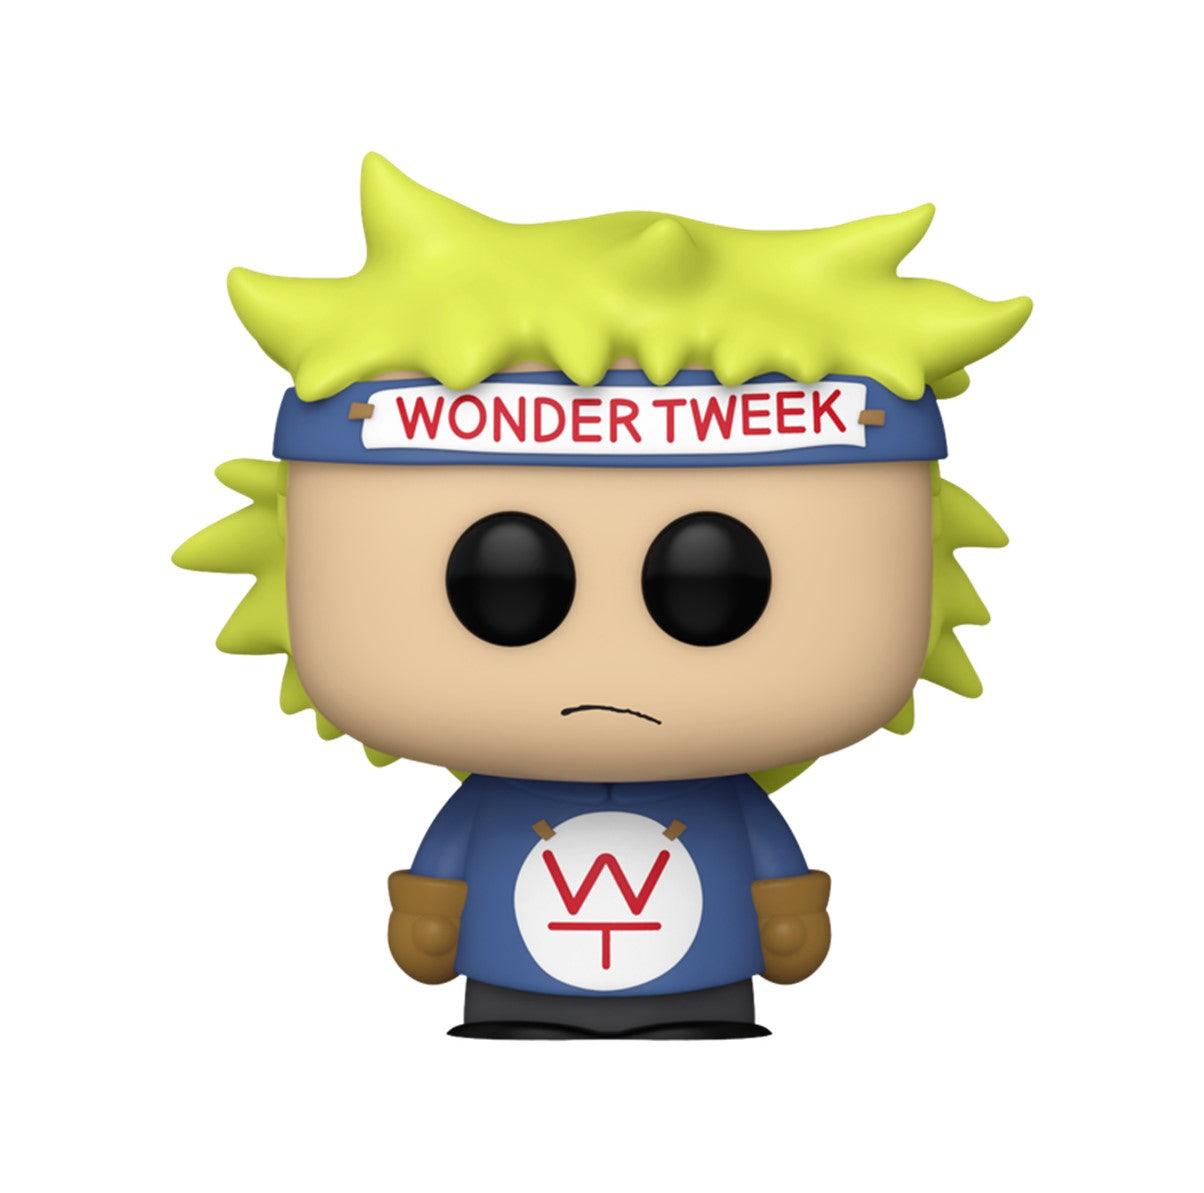 Pop! Television - South Park - Wonder Tweek - #1472 - Hobby Champion Inc